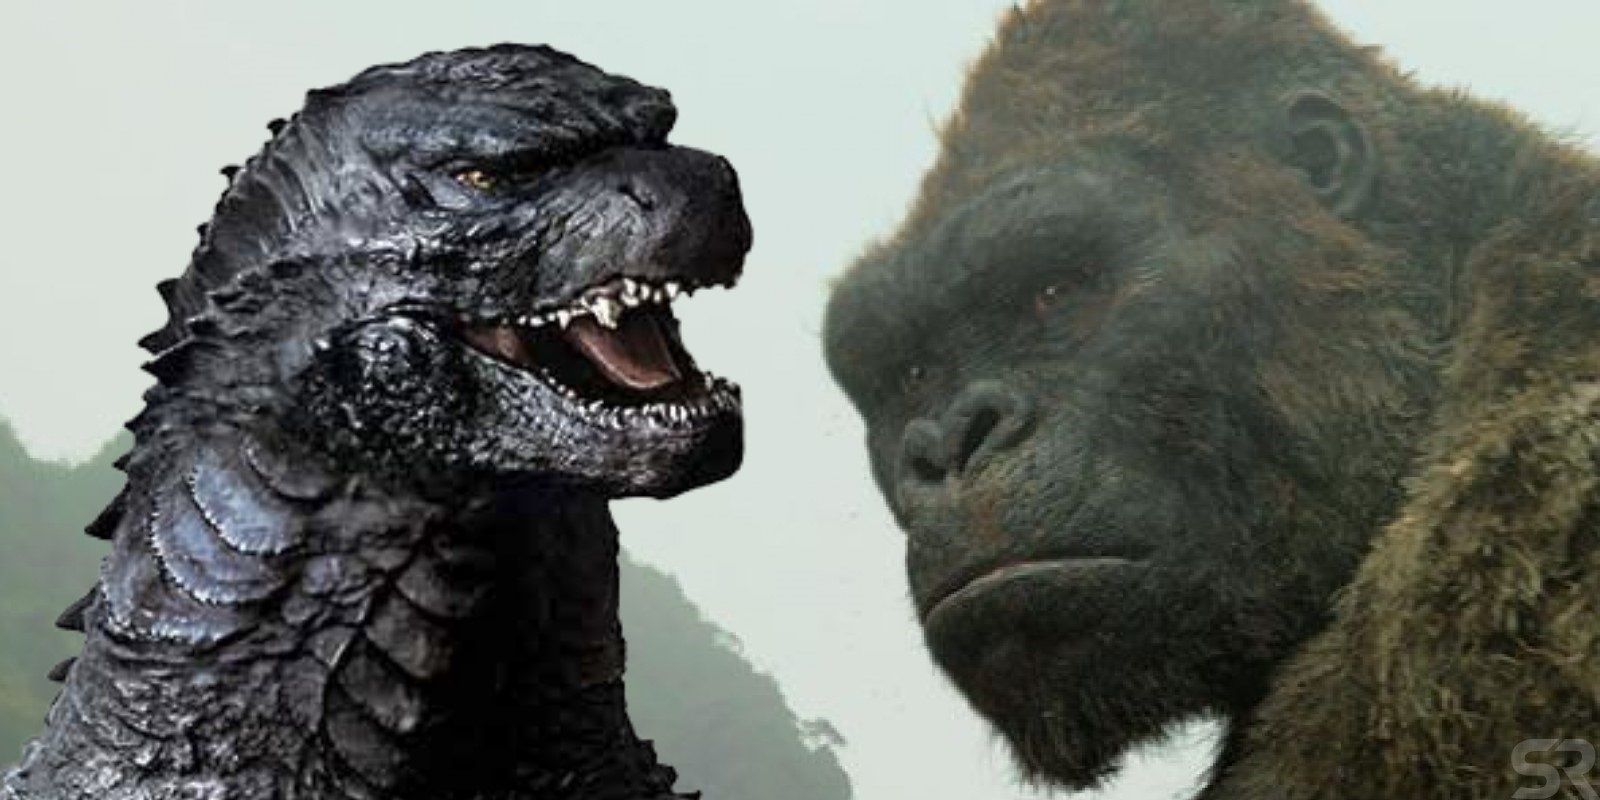 Legendary trolls fans in Godzilla vs. Kong costume contest